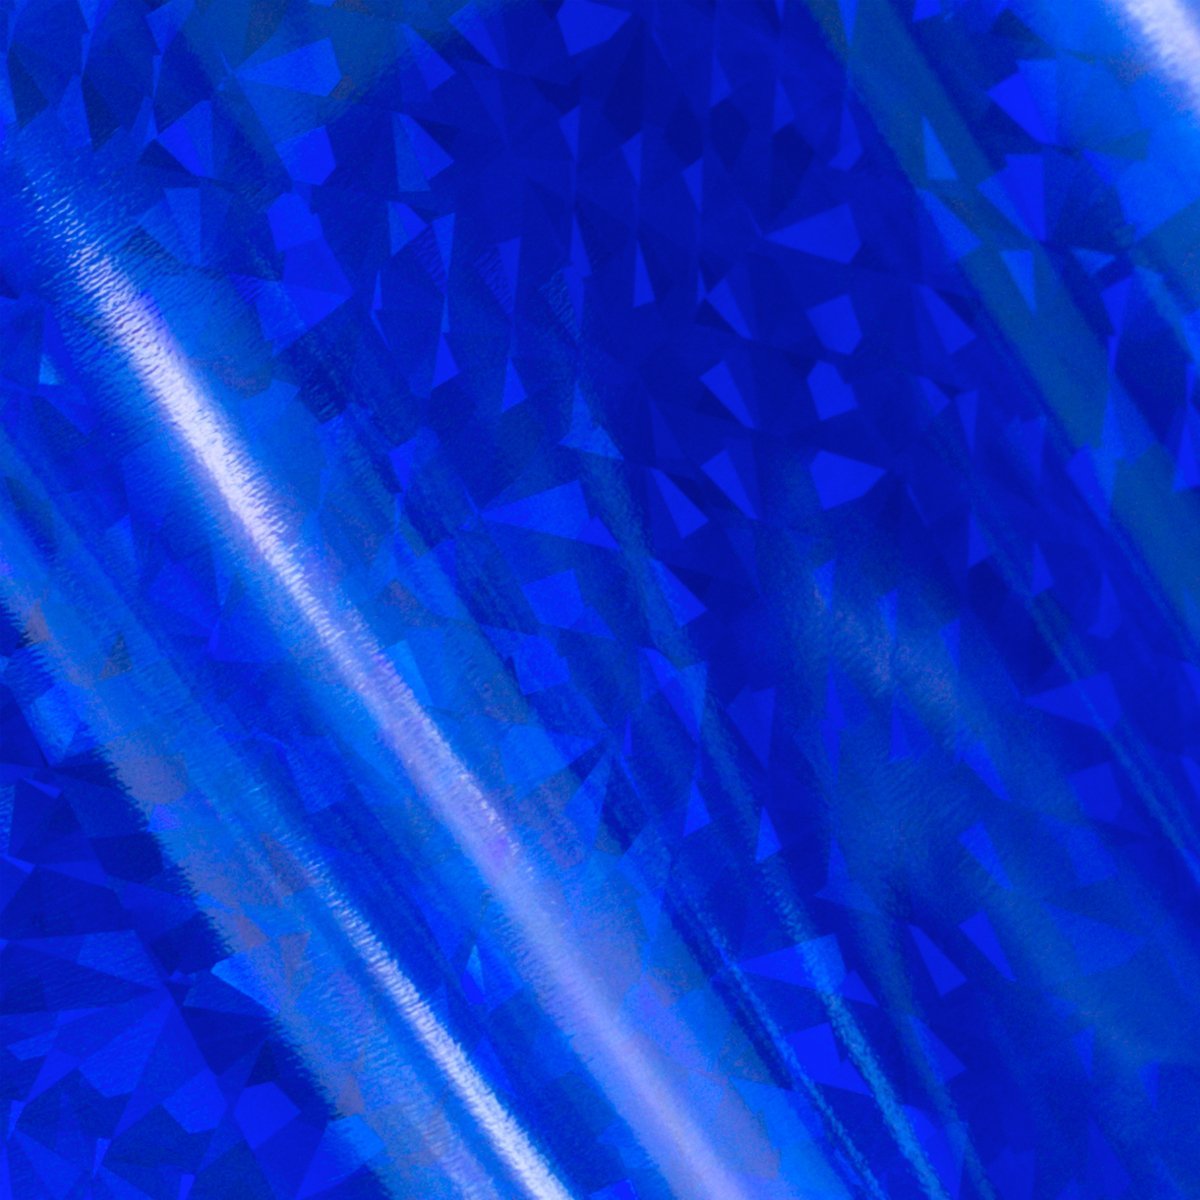 GoPress Blue Foil (Iridescent Triangular Patterned Finish) 120mm x 5m